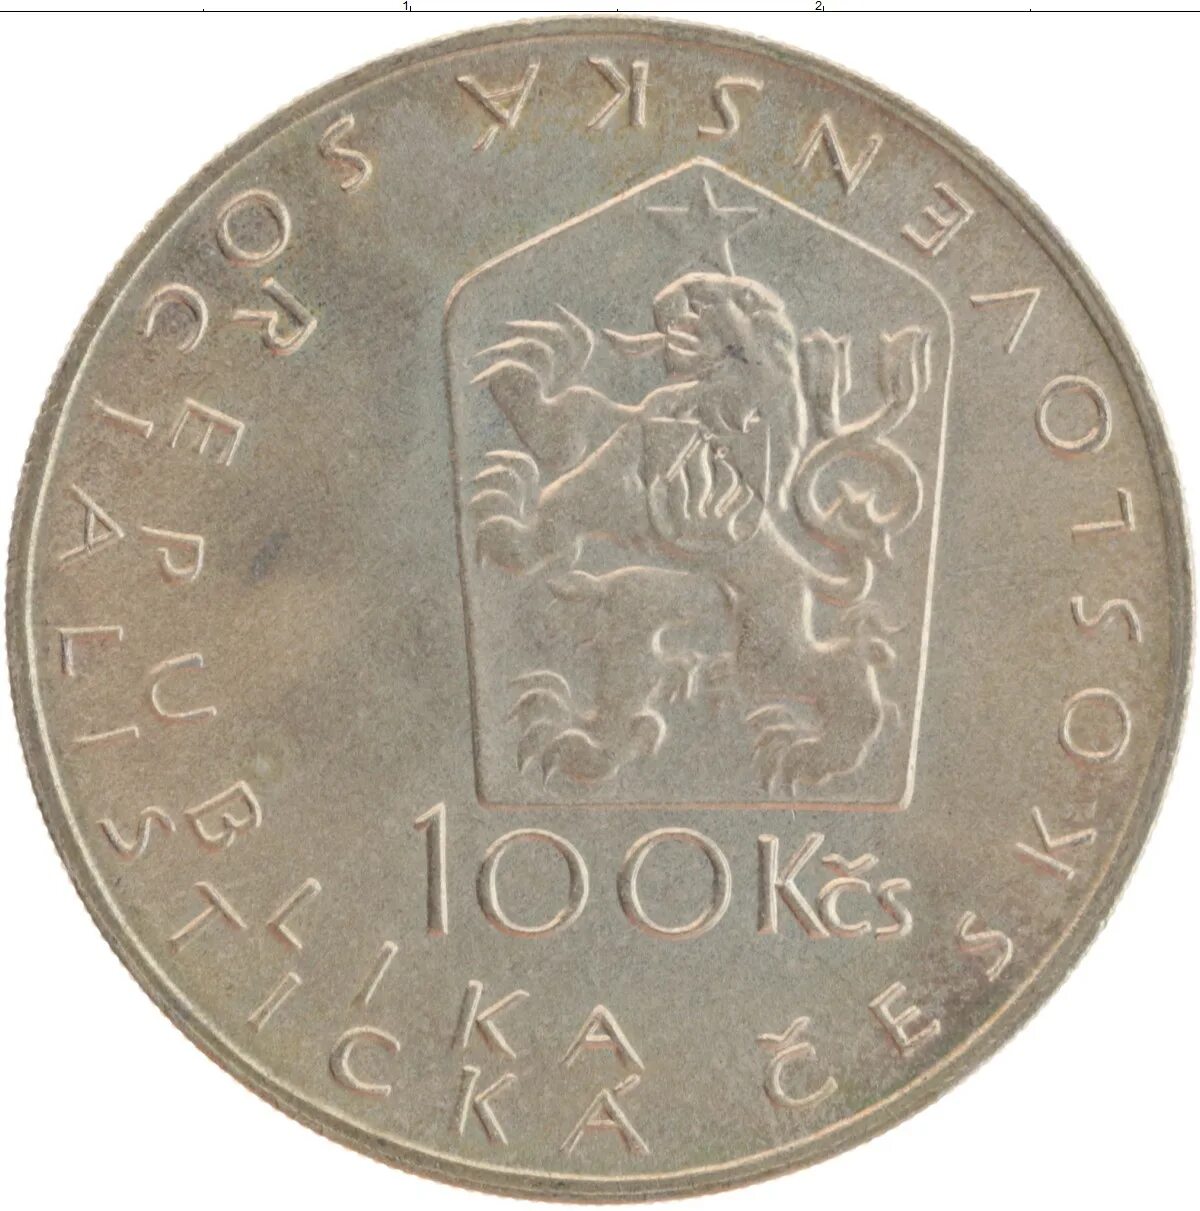 100 крон. 100 Чешских крон. Десять крон ЧССР 1984 года. Швеция 10 крон 1984 года. 100 Крон в рублях.